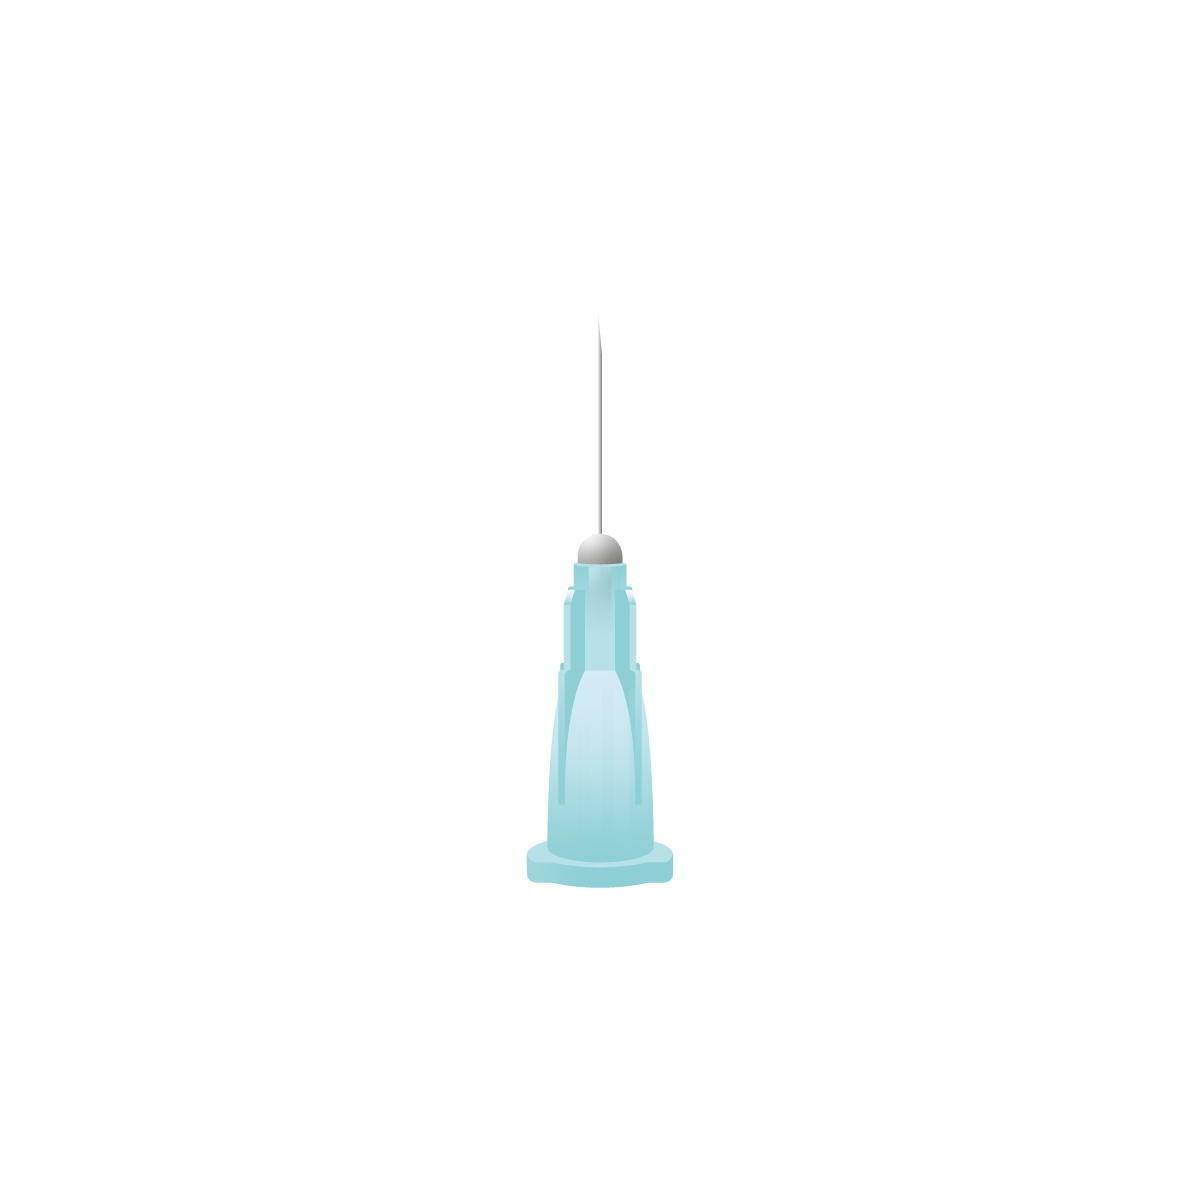 31g Light Blue 12mm Meso-relle Mesotherapy Needle - UKMEDI